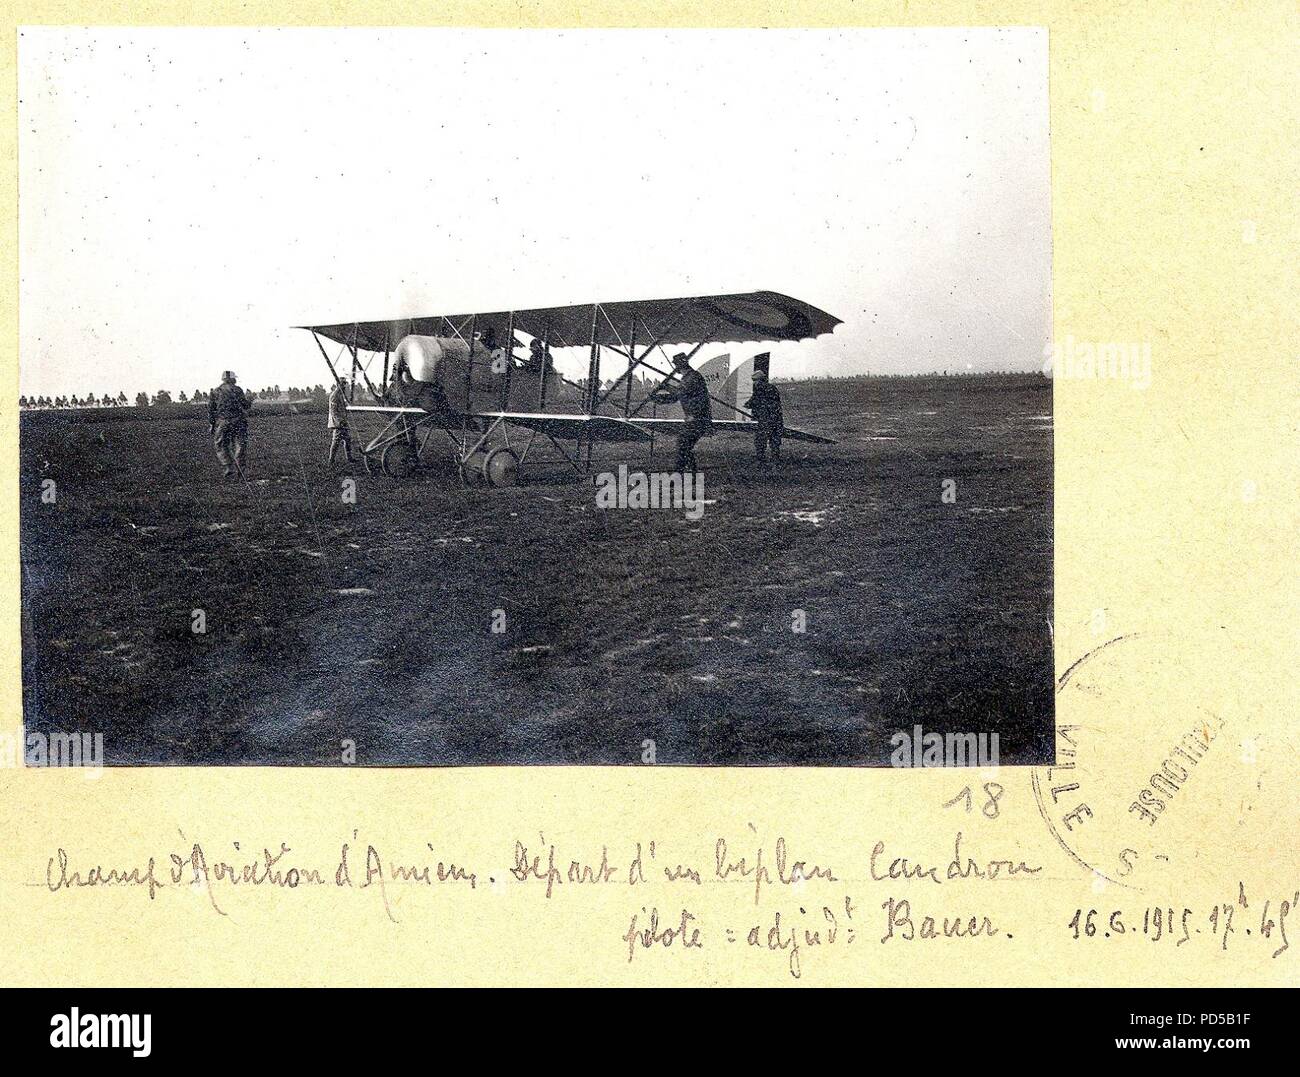 Amiens Champ d'aviation. départ d'un biplan Caudron G. III.pilote adjudant Bauer-Fonds Berthelé - 49 Fi 1871-18. Stockfoto